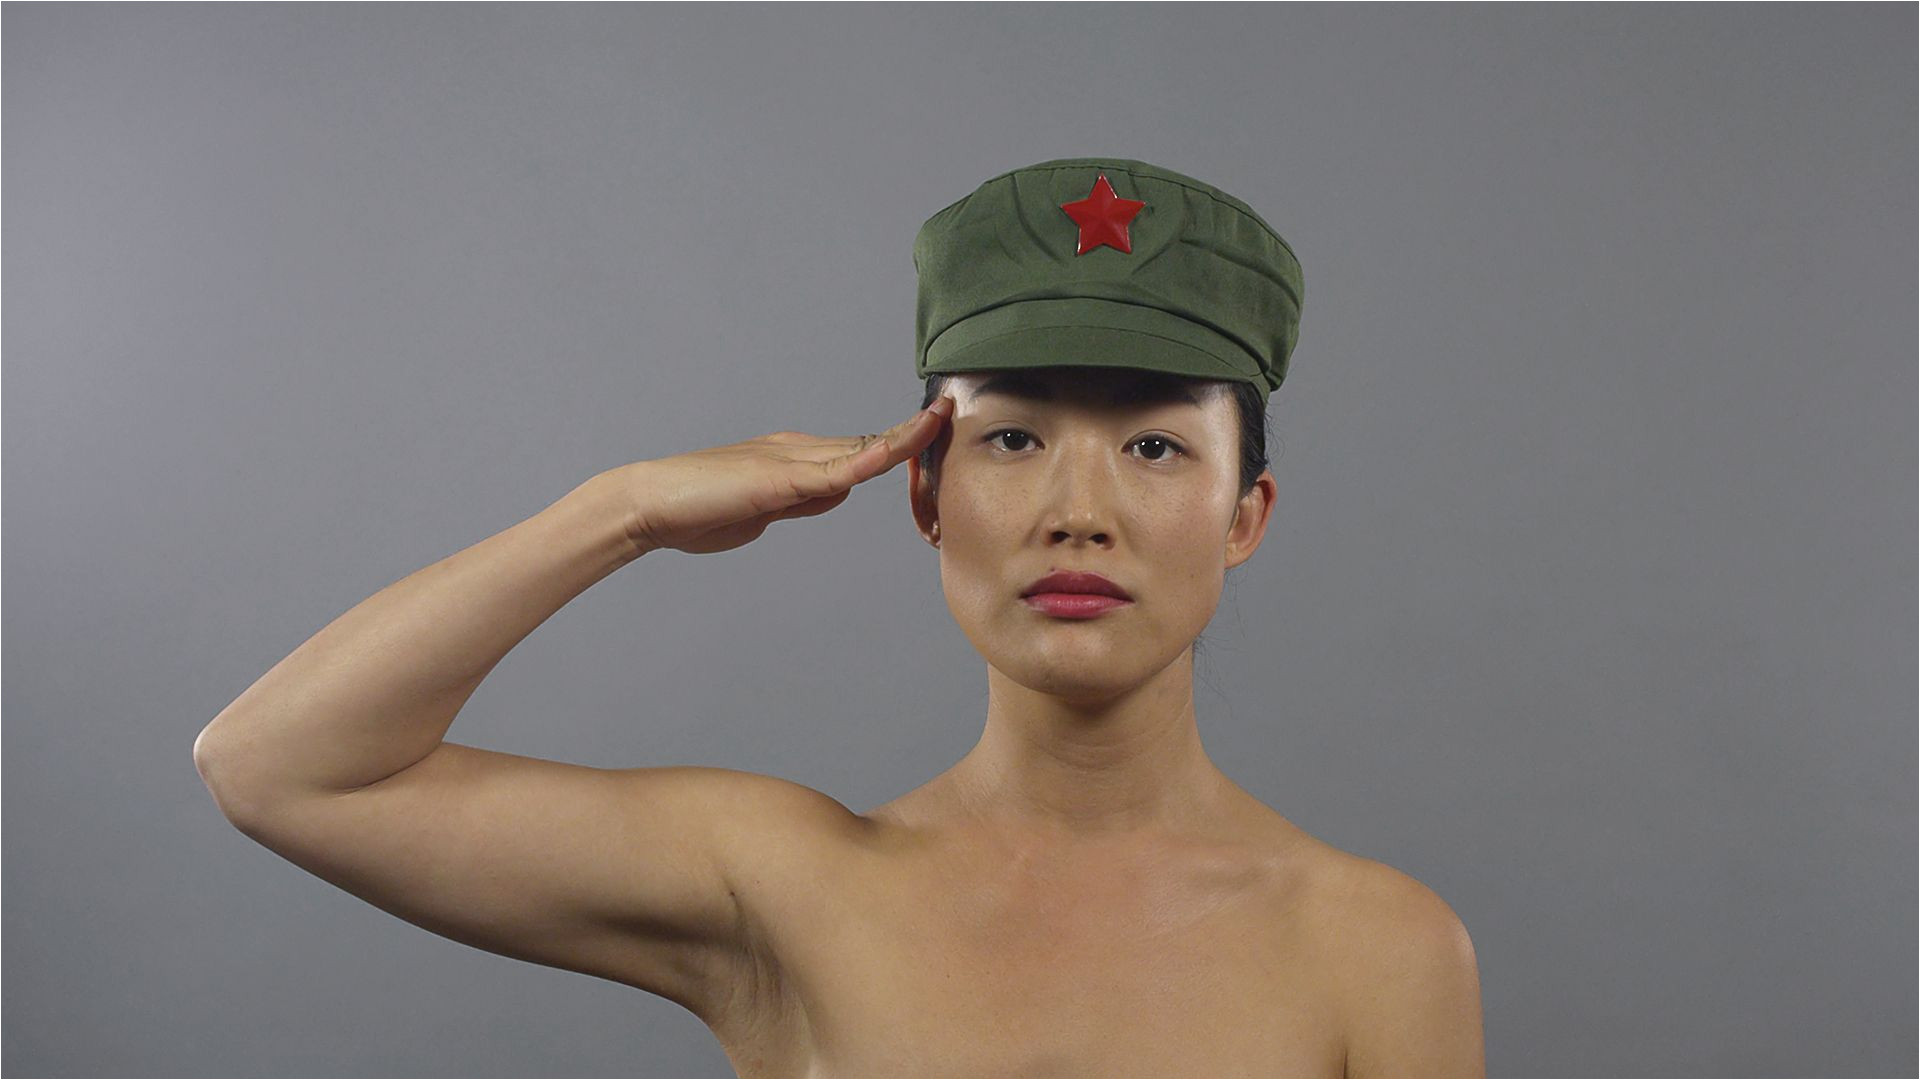 1950s North Korea dprk military hair makeup style fashion